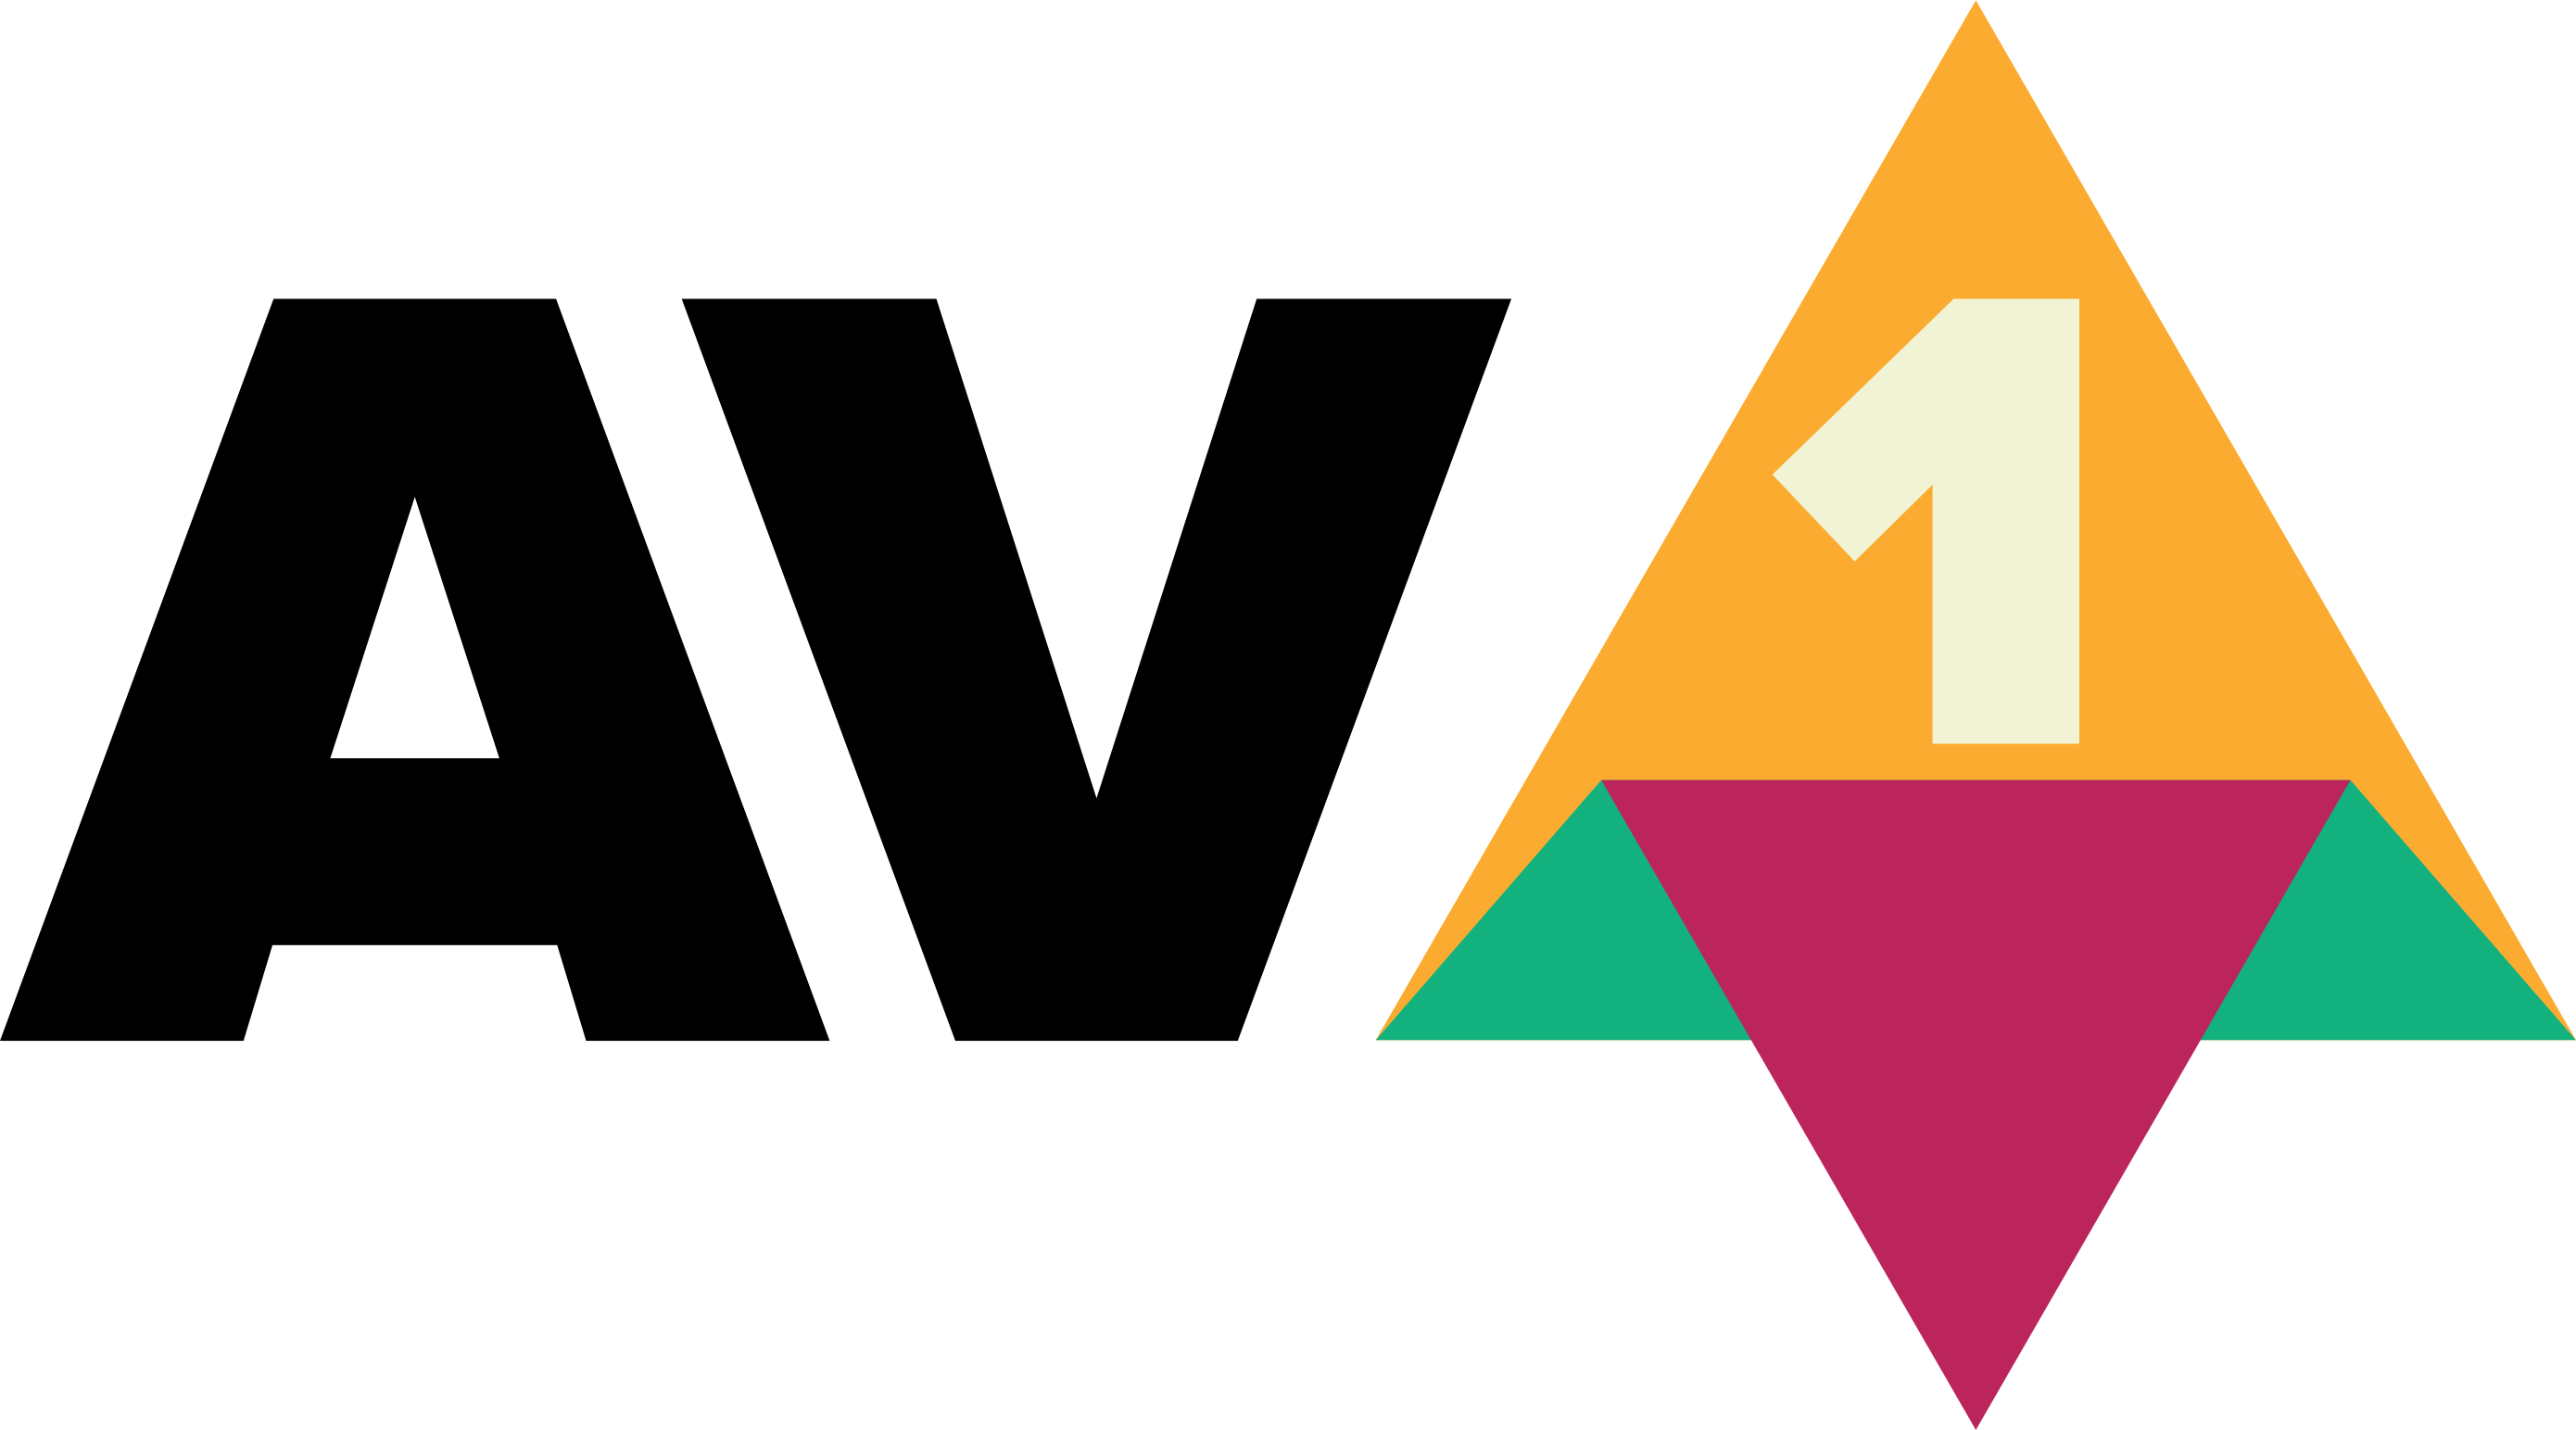 AV1 logo